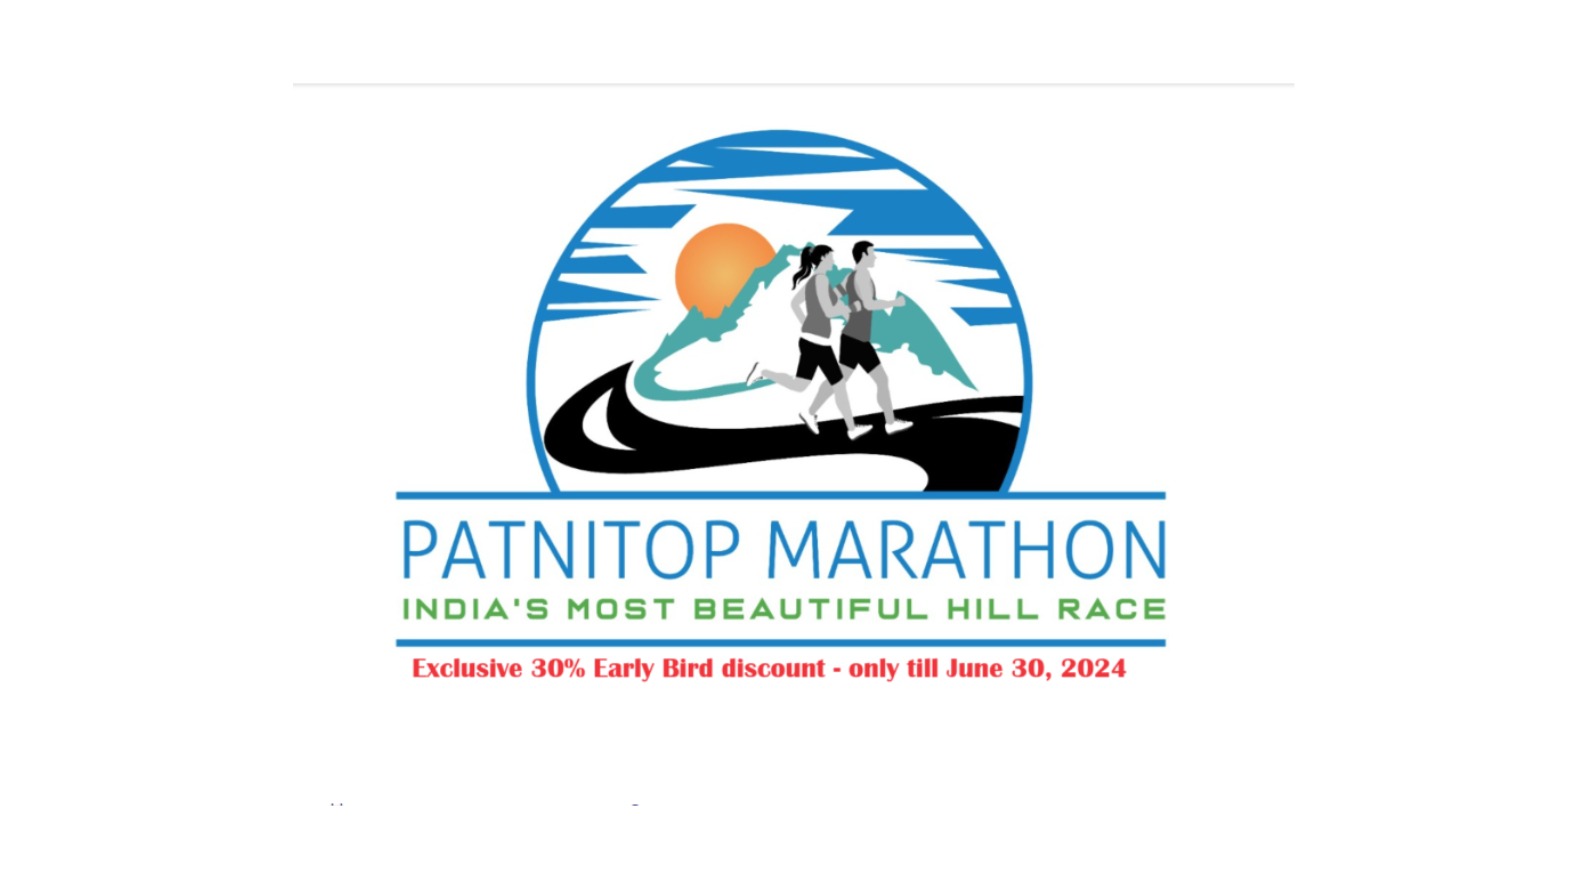 Patnitop Marathon 2025